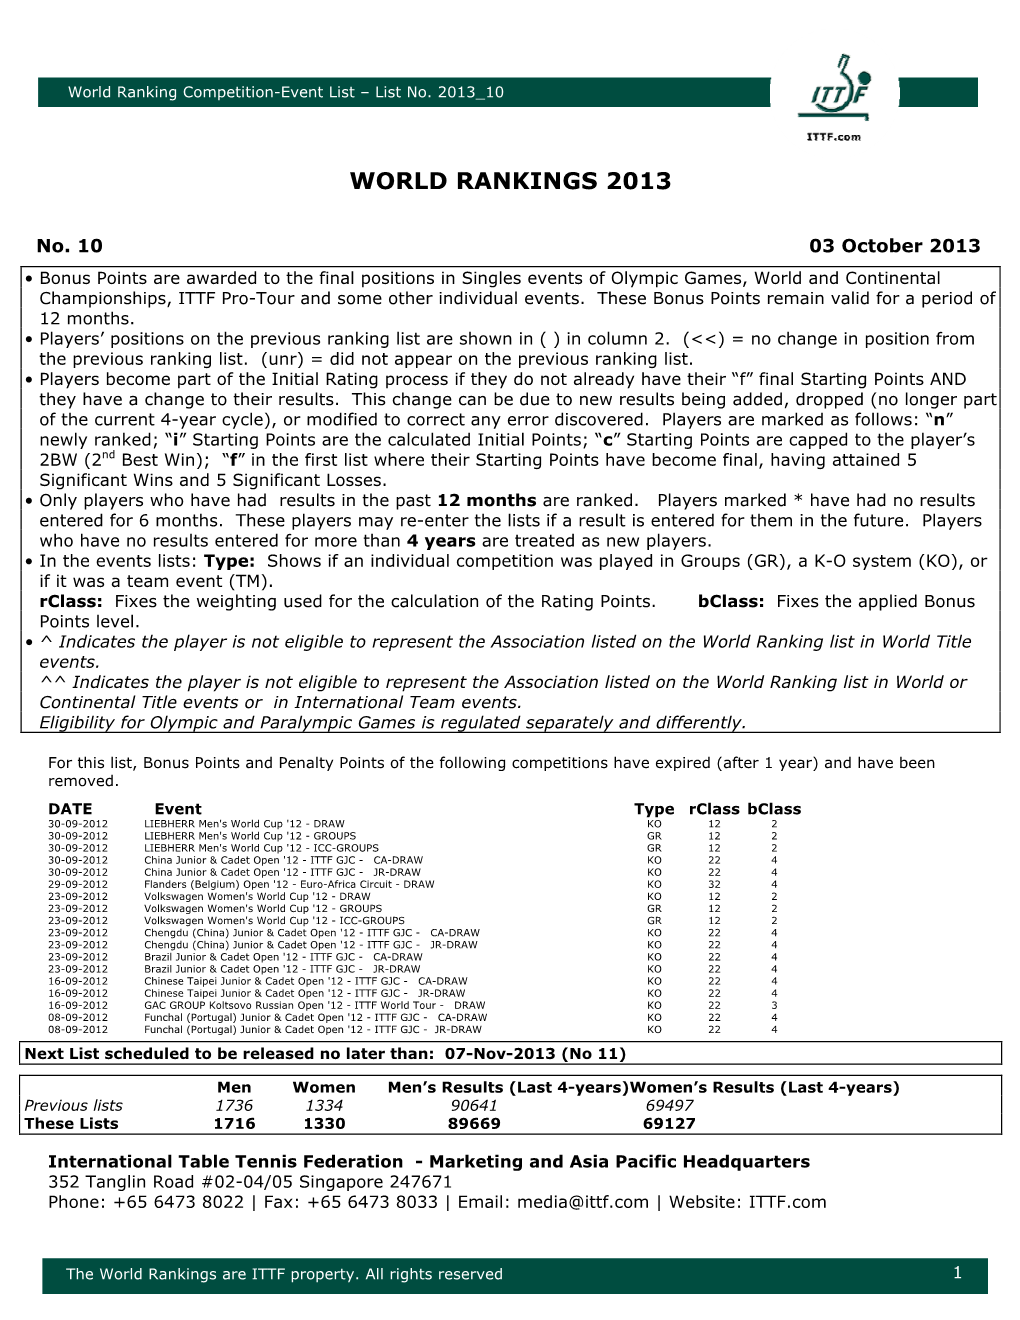 World Rankings 2013